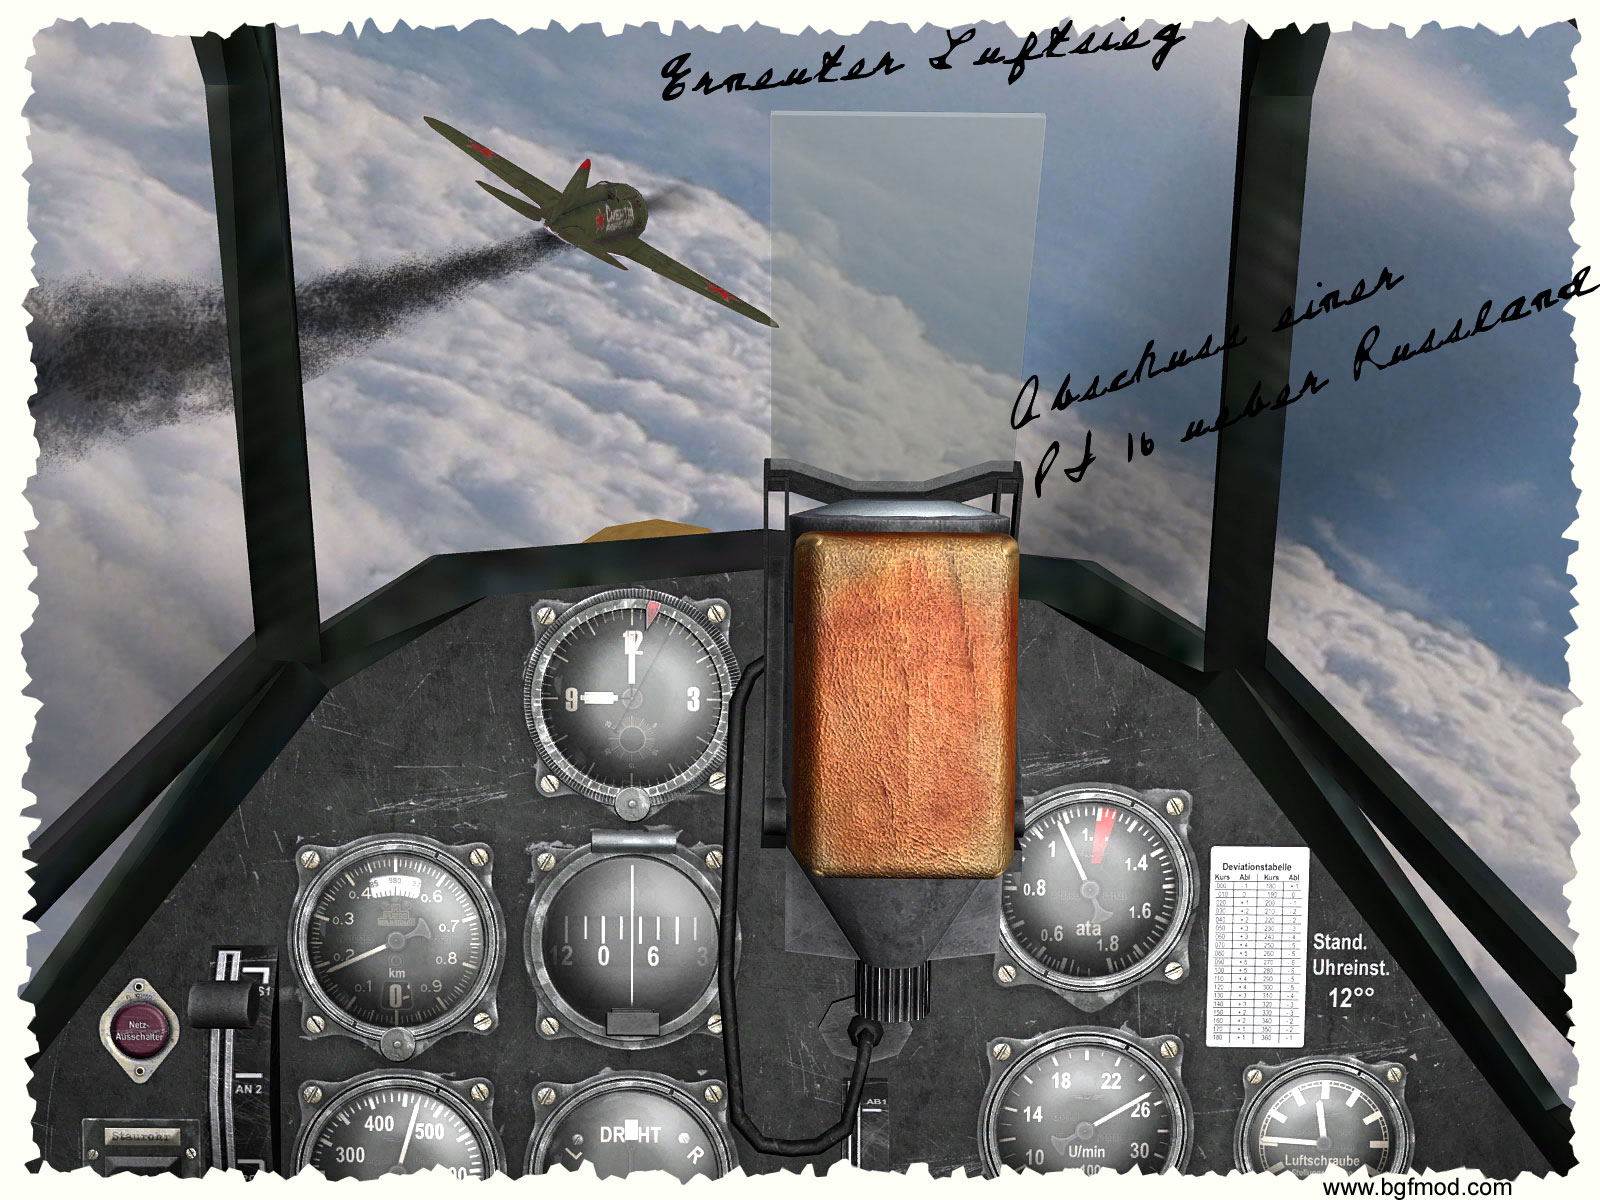 Bf-109 Cockpit